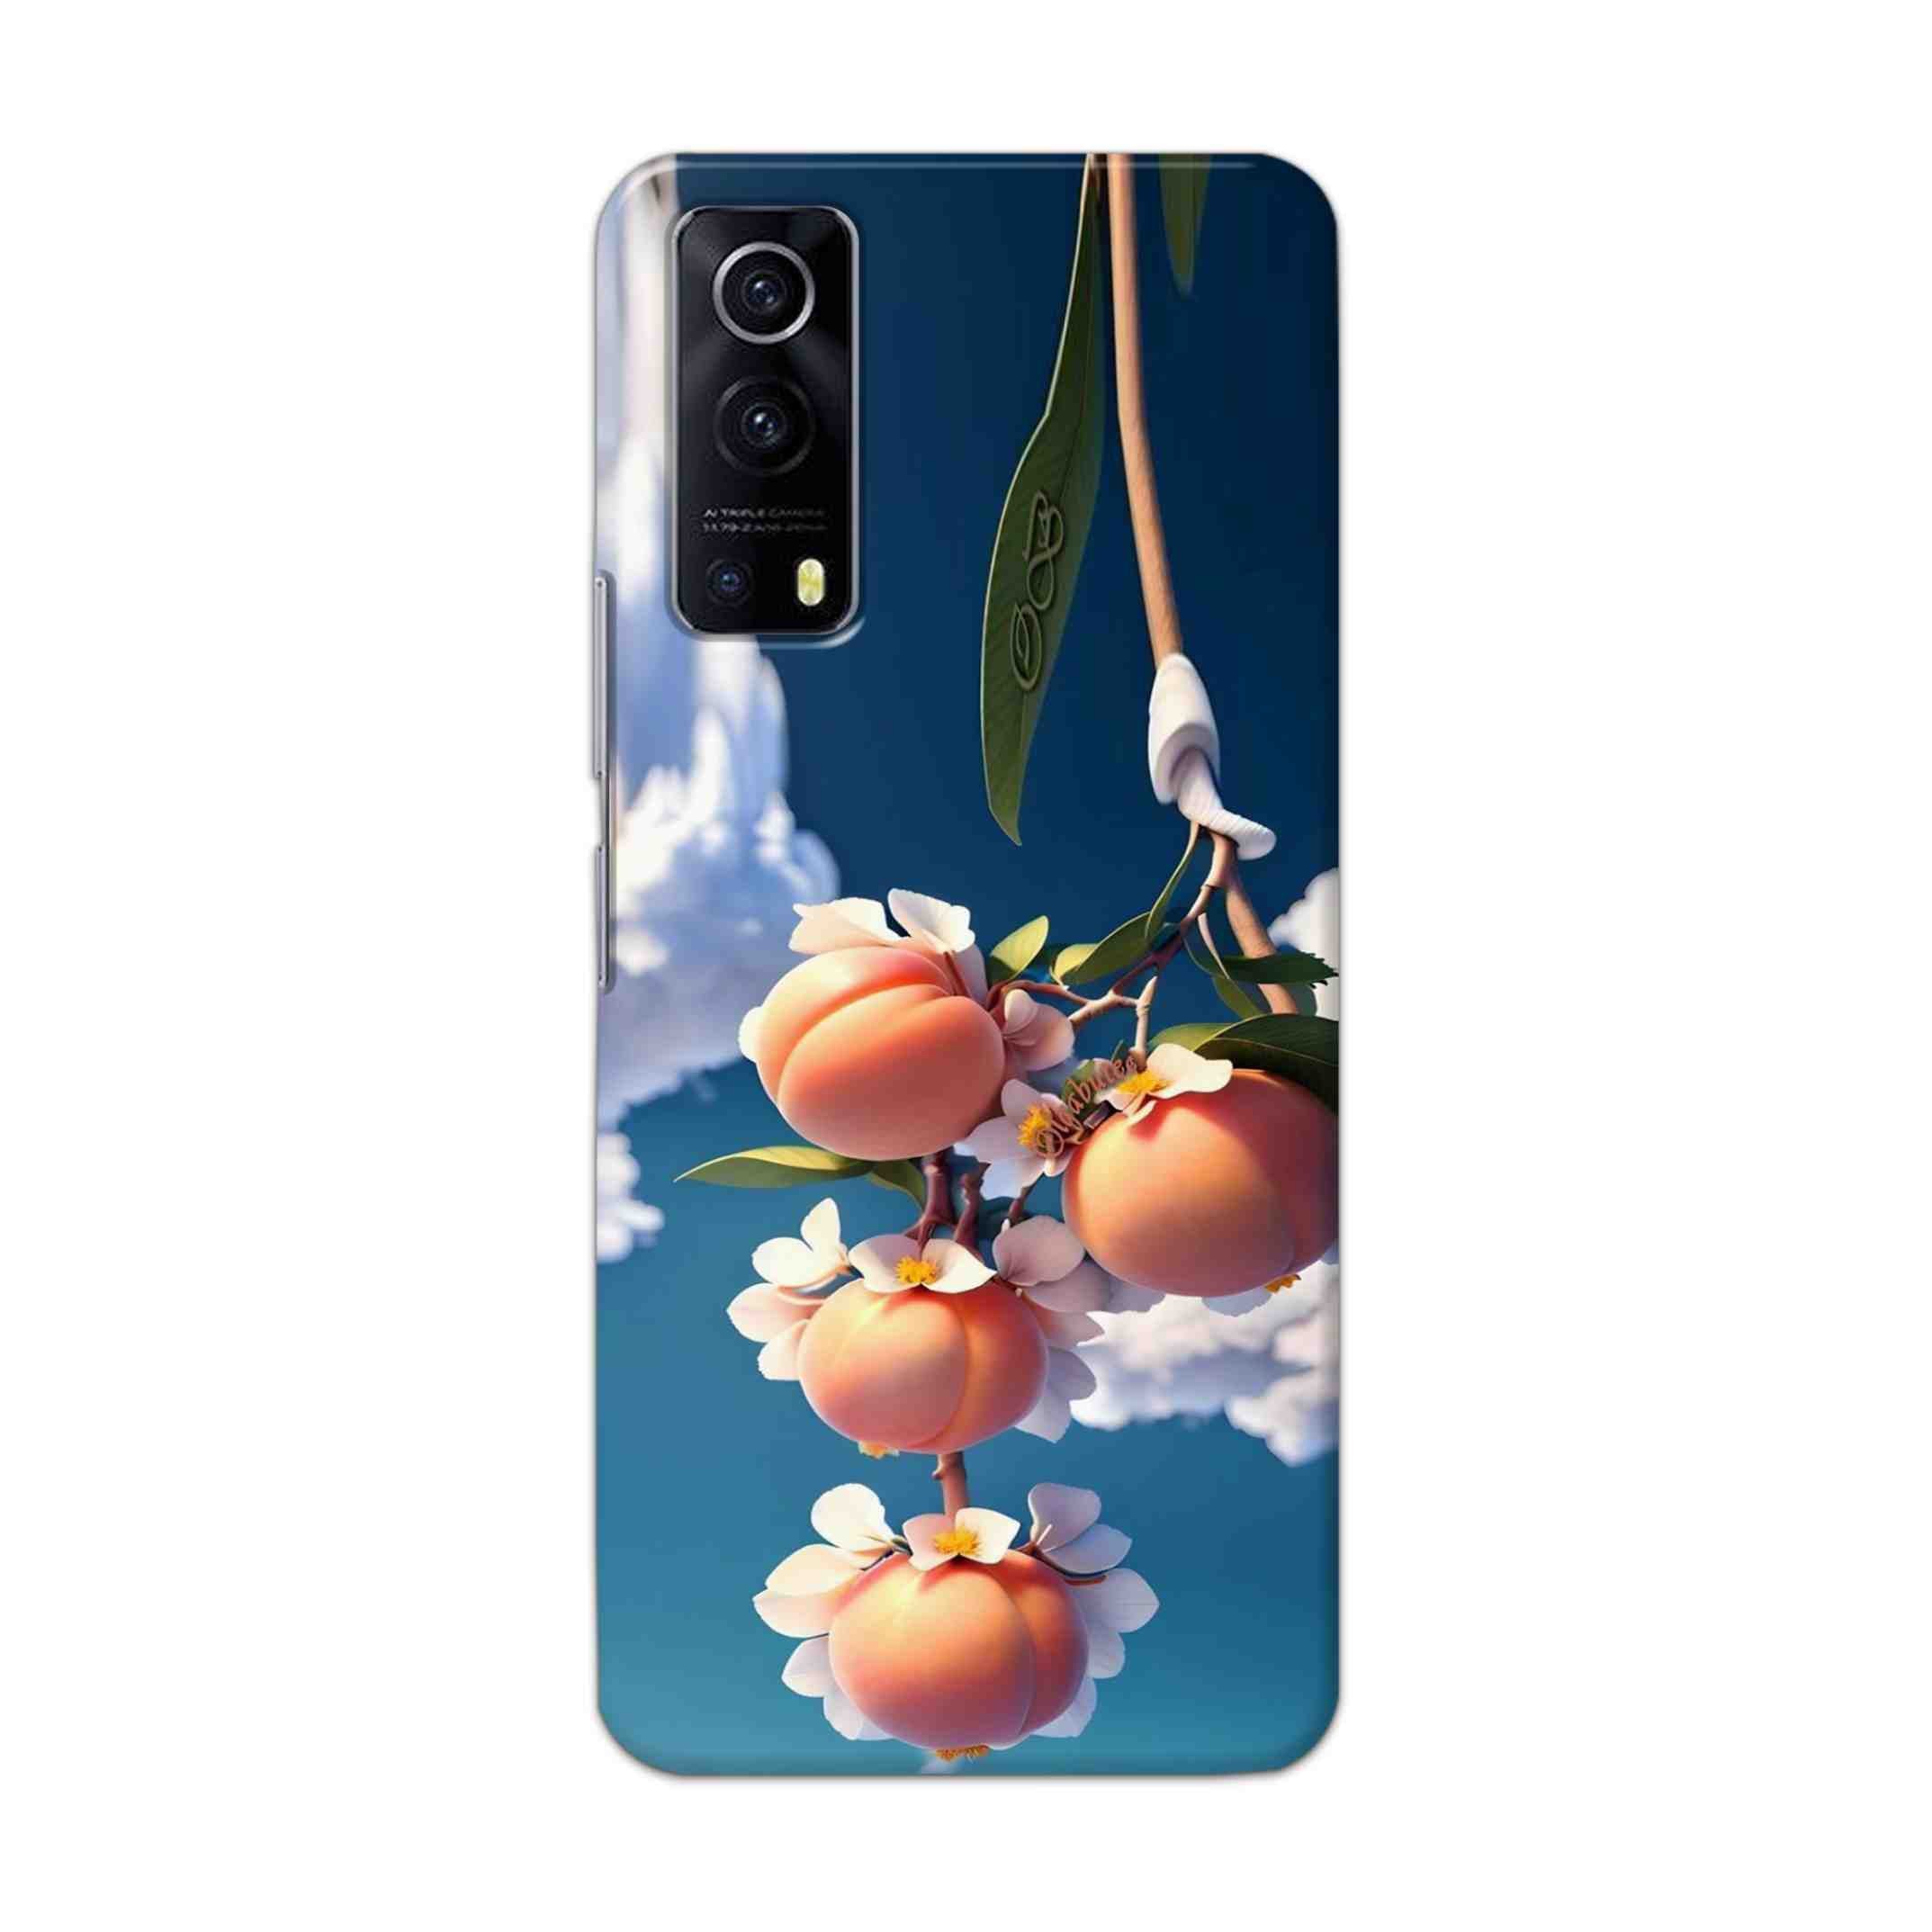 Buy Fruit Hard Back Mobile Phone Case Cover For Vivo IQOO Z3 Online